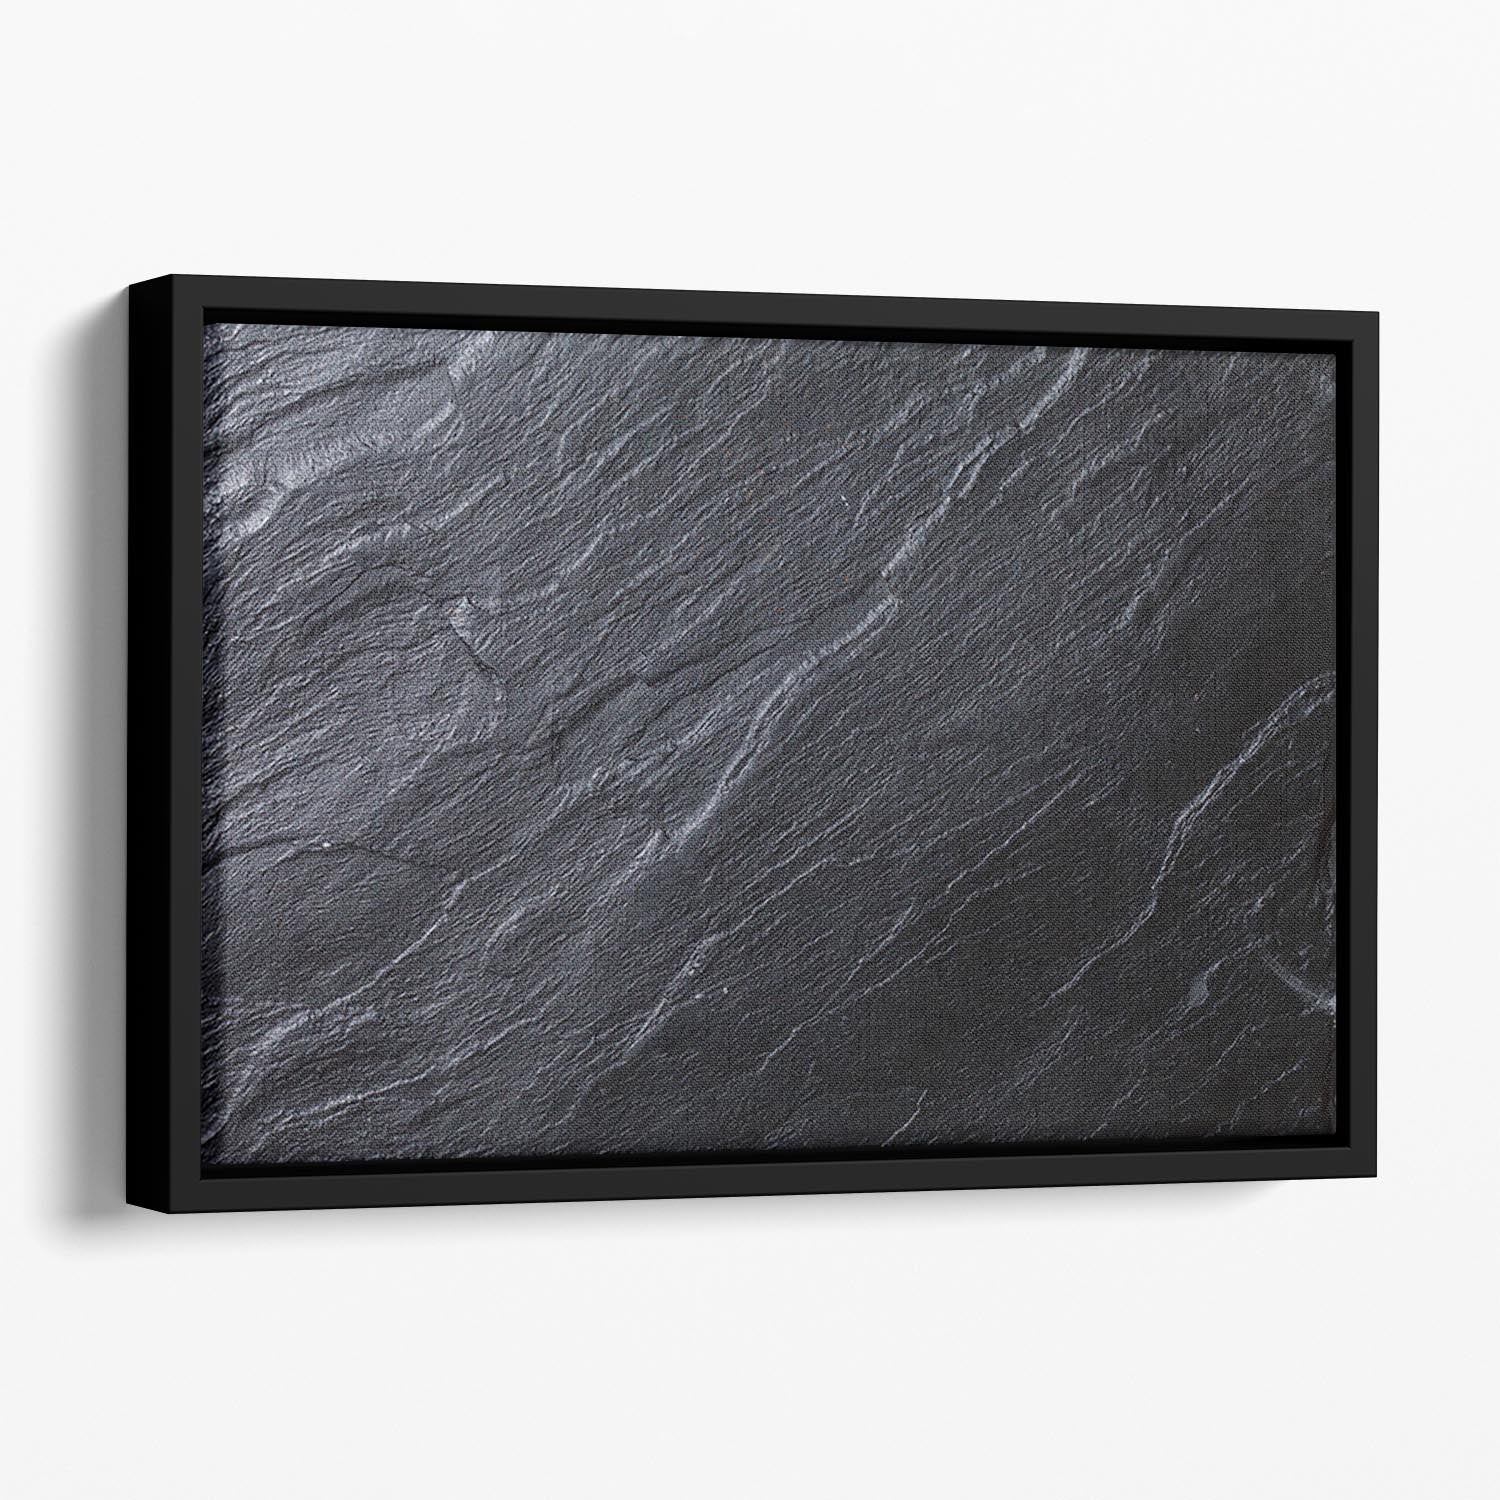 Black Textured Stone Floating Framed Canvas - Canvas Art Rocks - 1